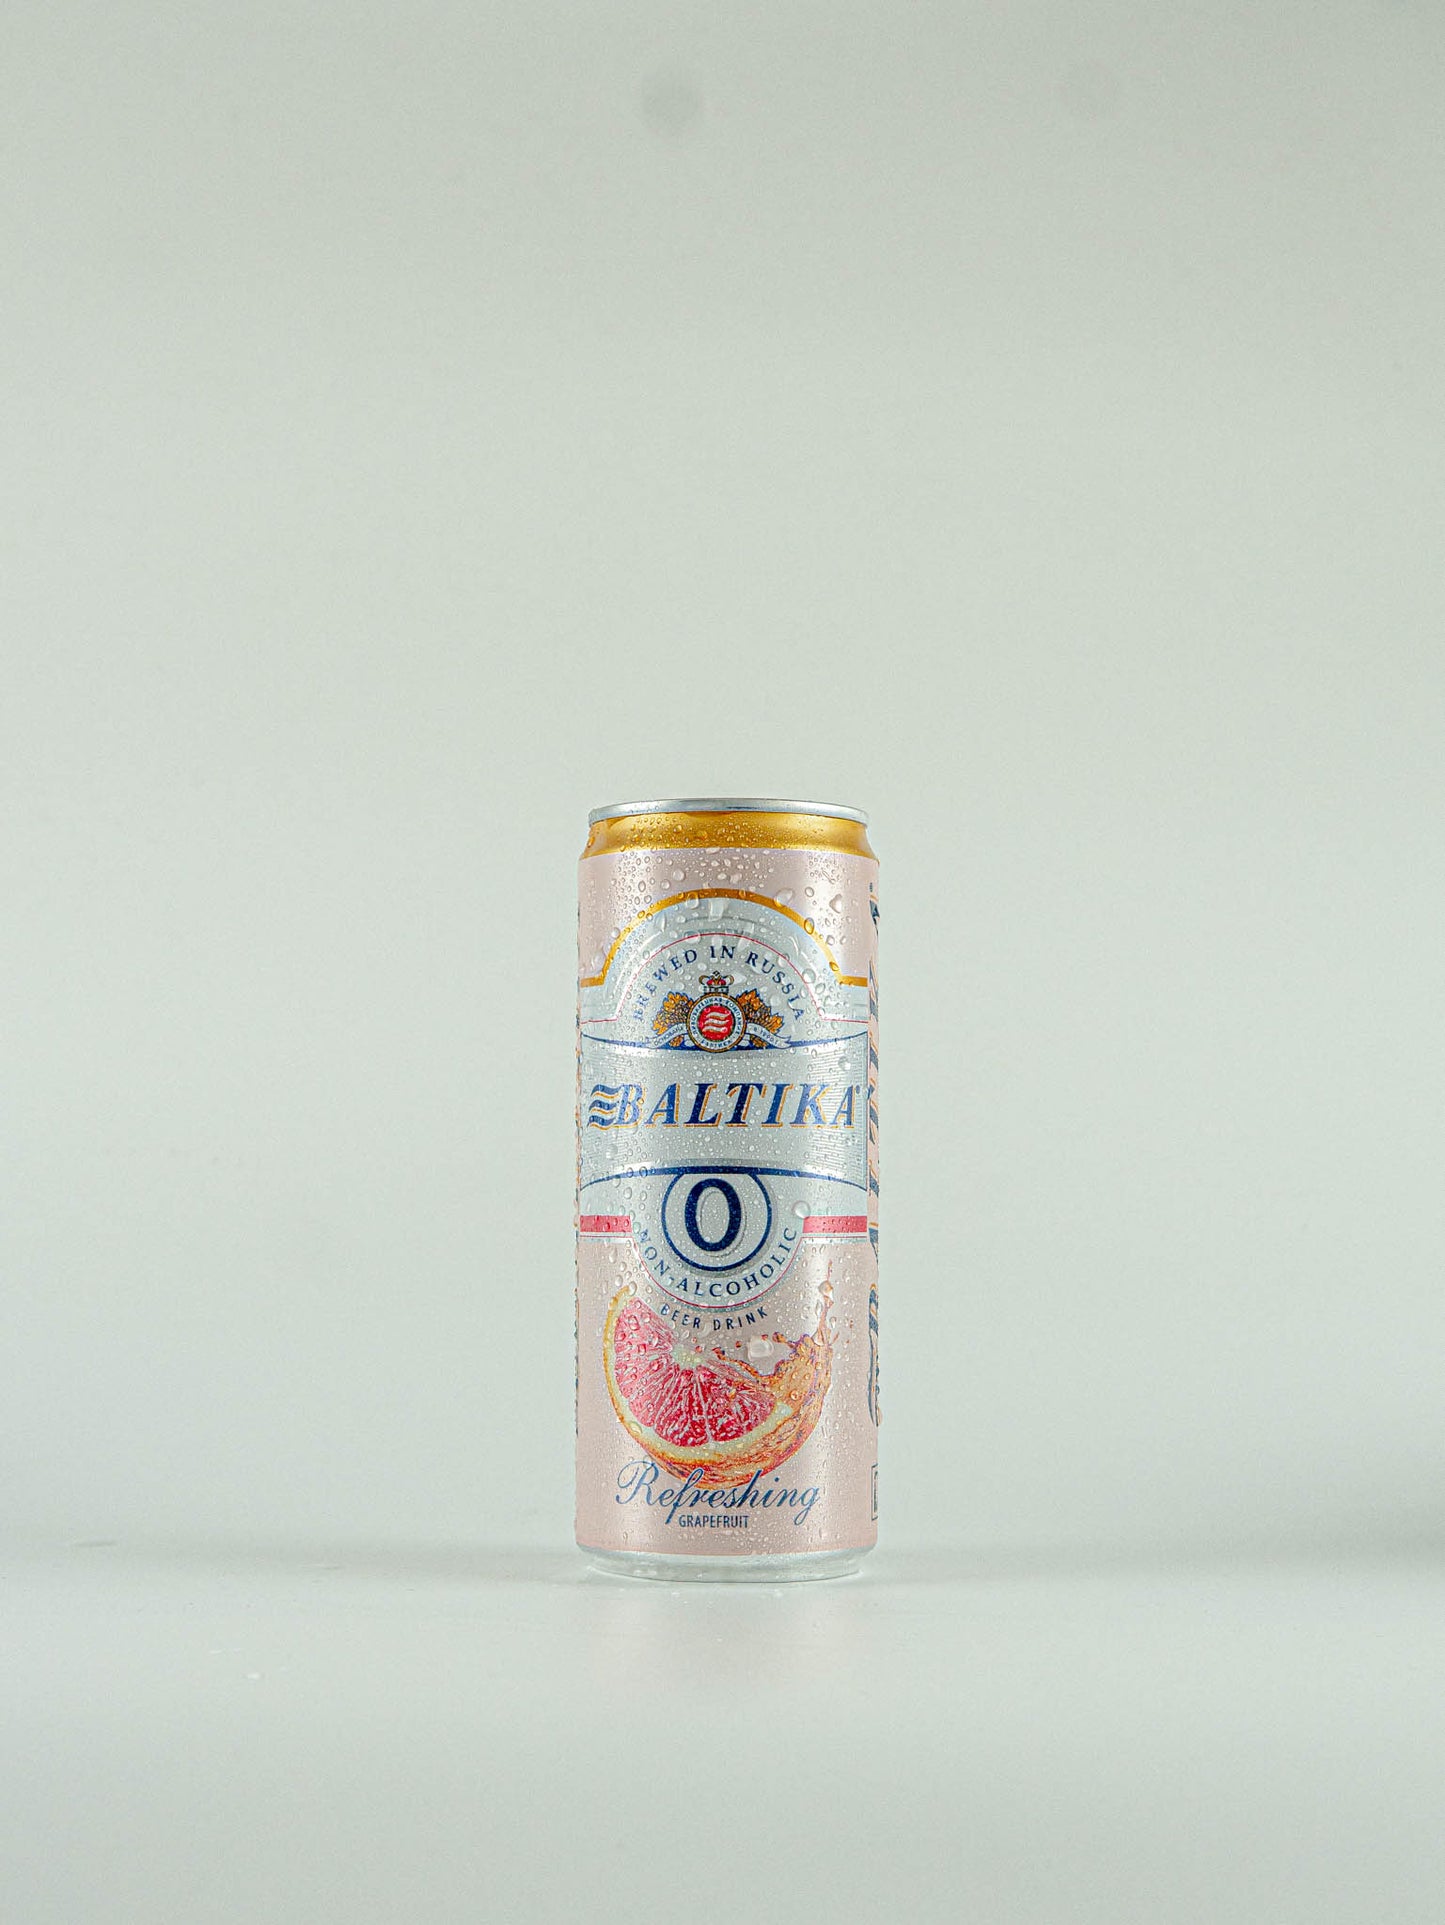 Baltika Grapefruit Alcohol Free Wheat Beer 0.5% - 330ml